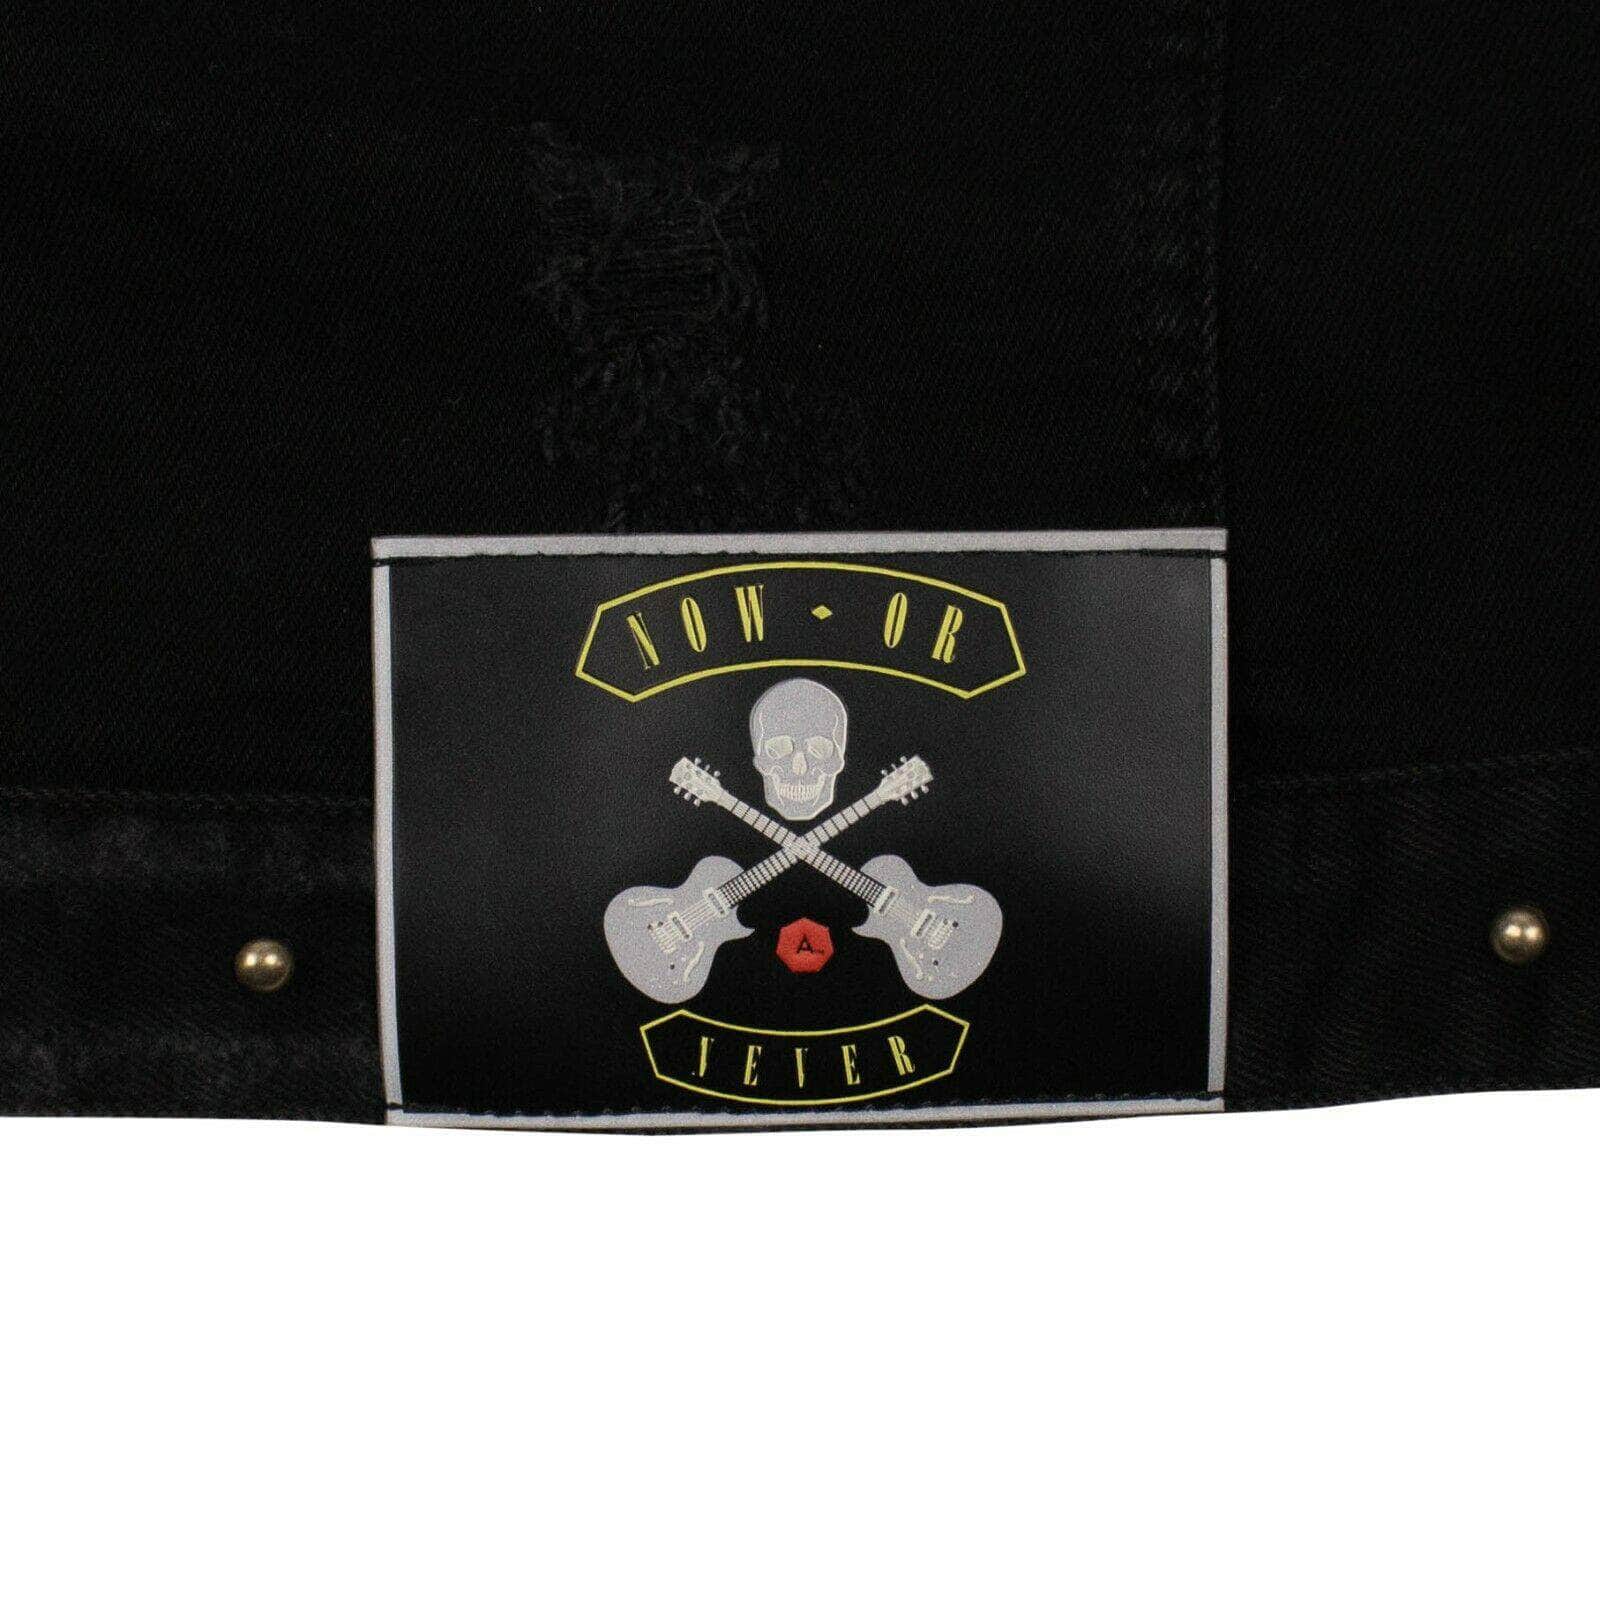 Alchemist Men's Jackets S Denim Tassel Fringed Jacket - Black 69LE-1863/S 69LE-1863/S